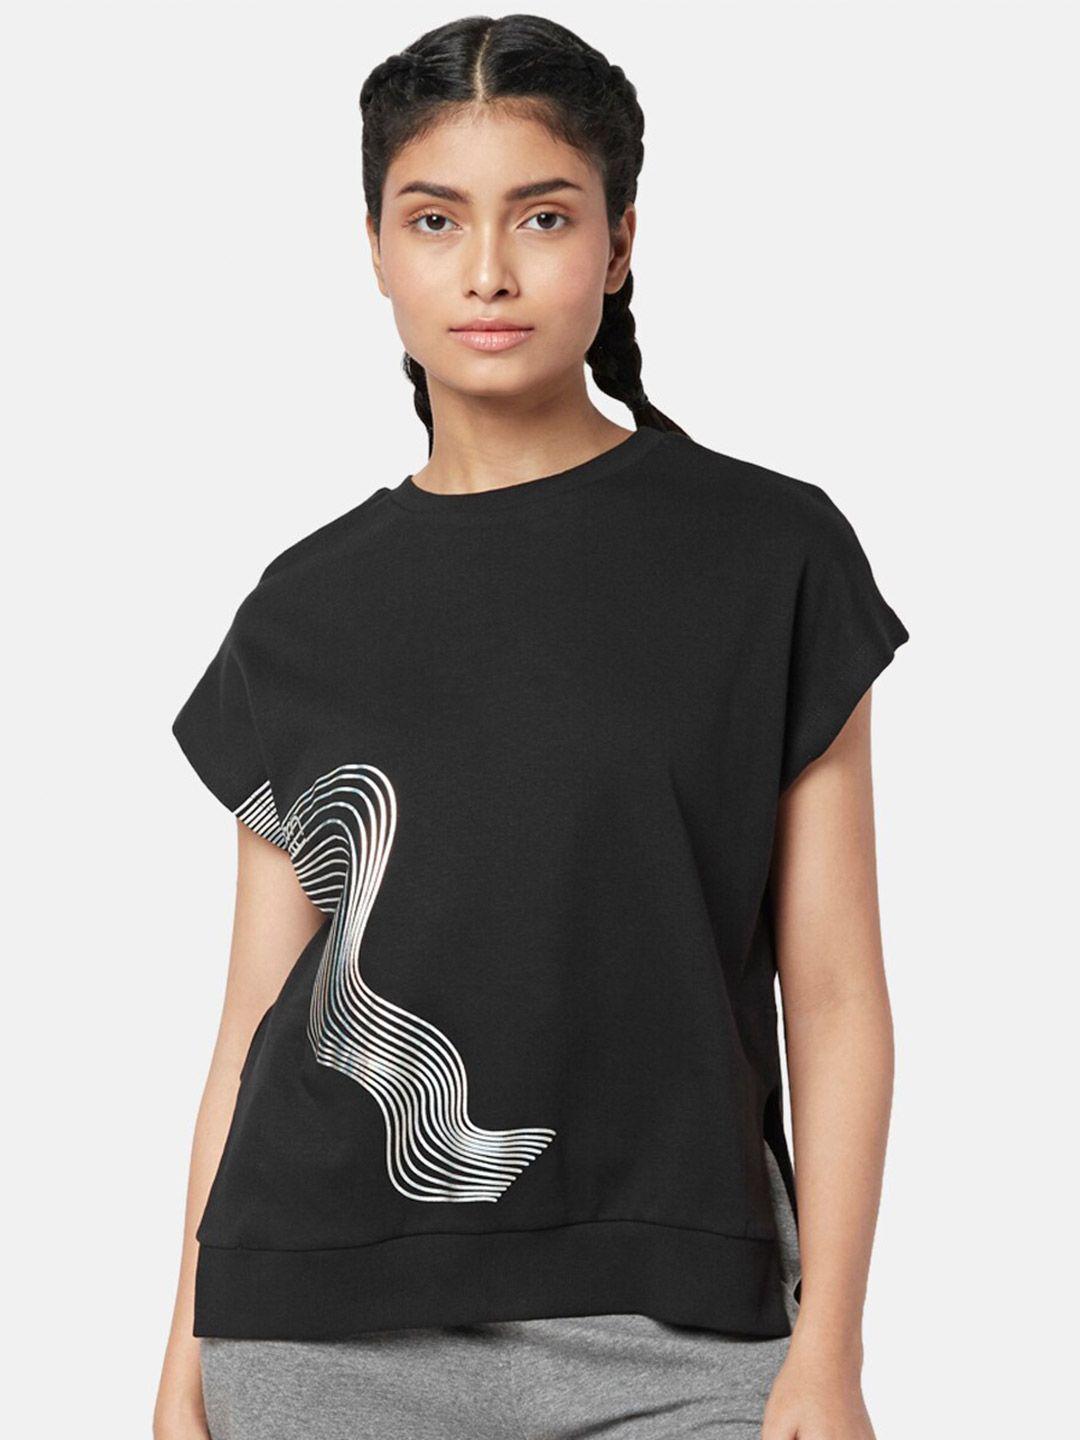 ajile-by-pantaloons-geometric-print-extended-sleeves-top